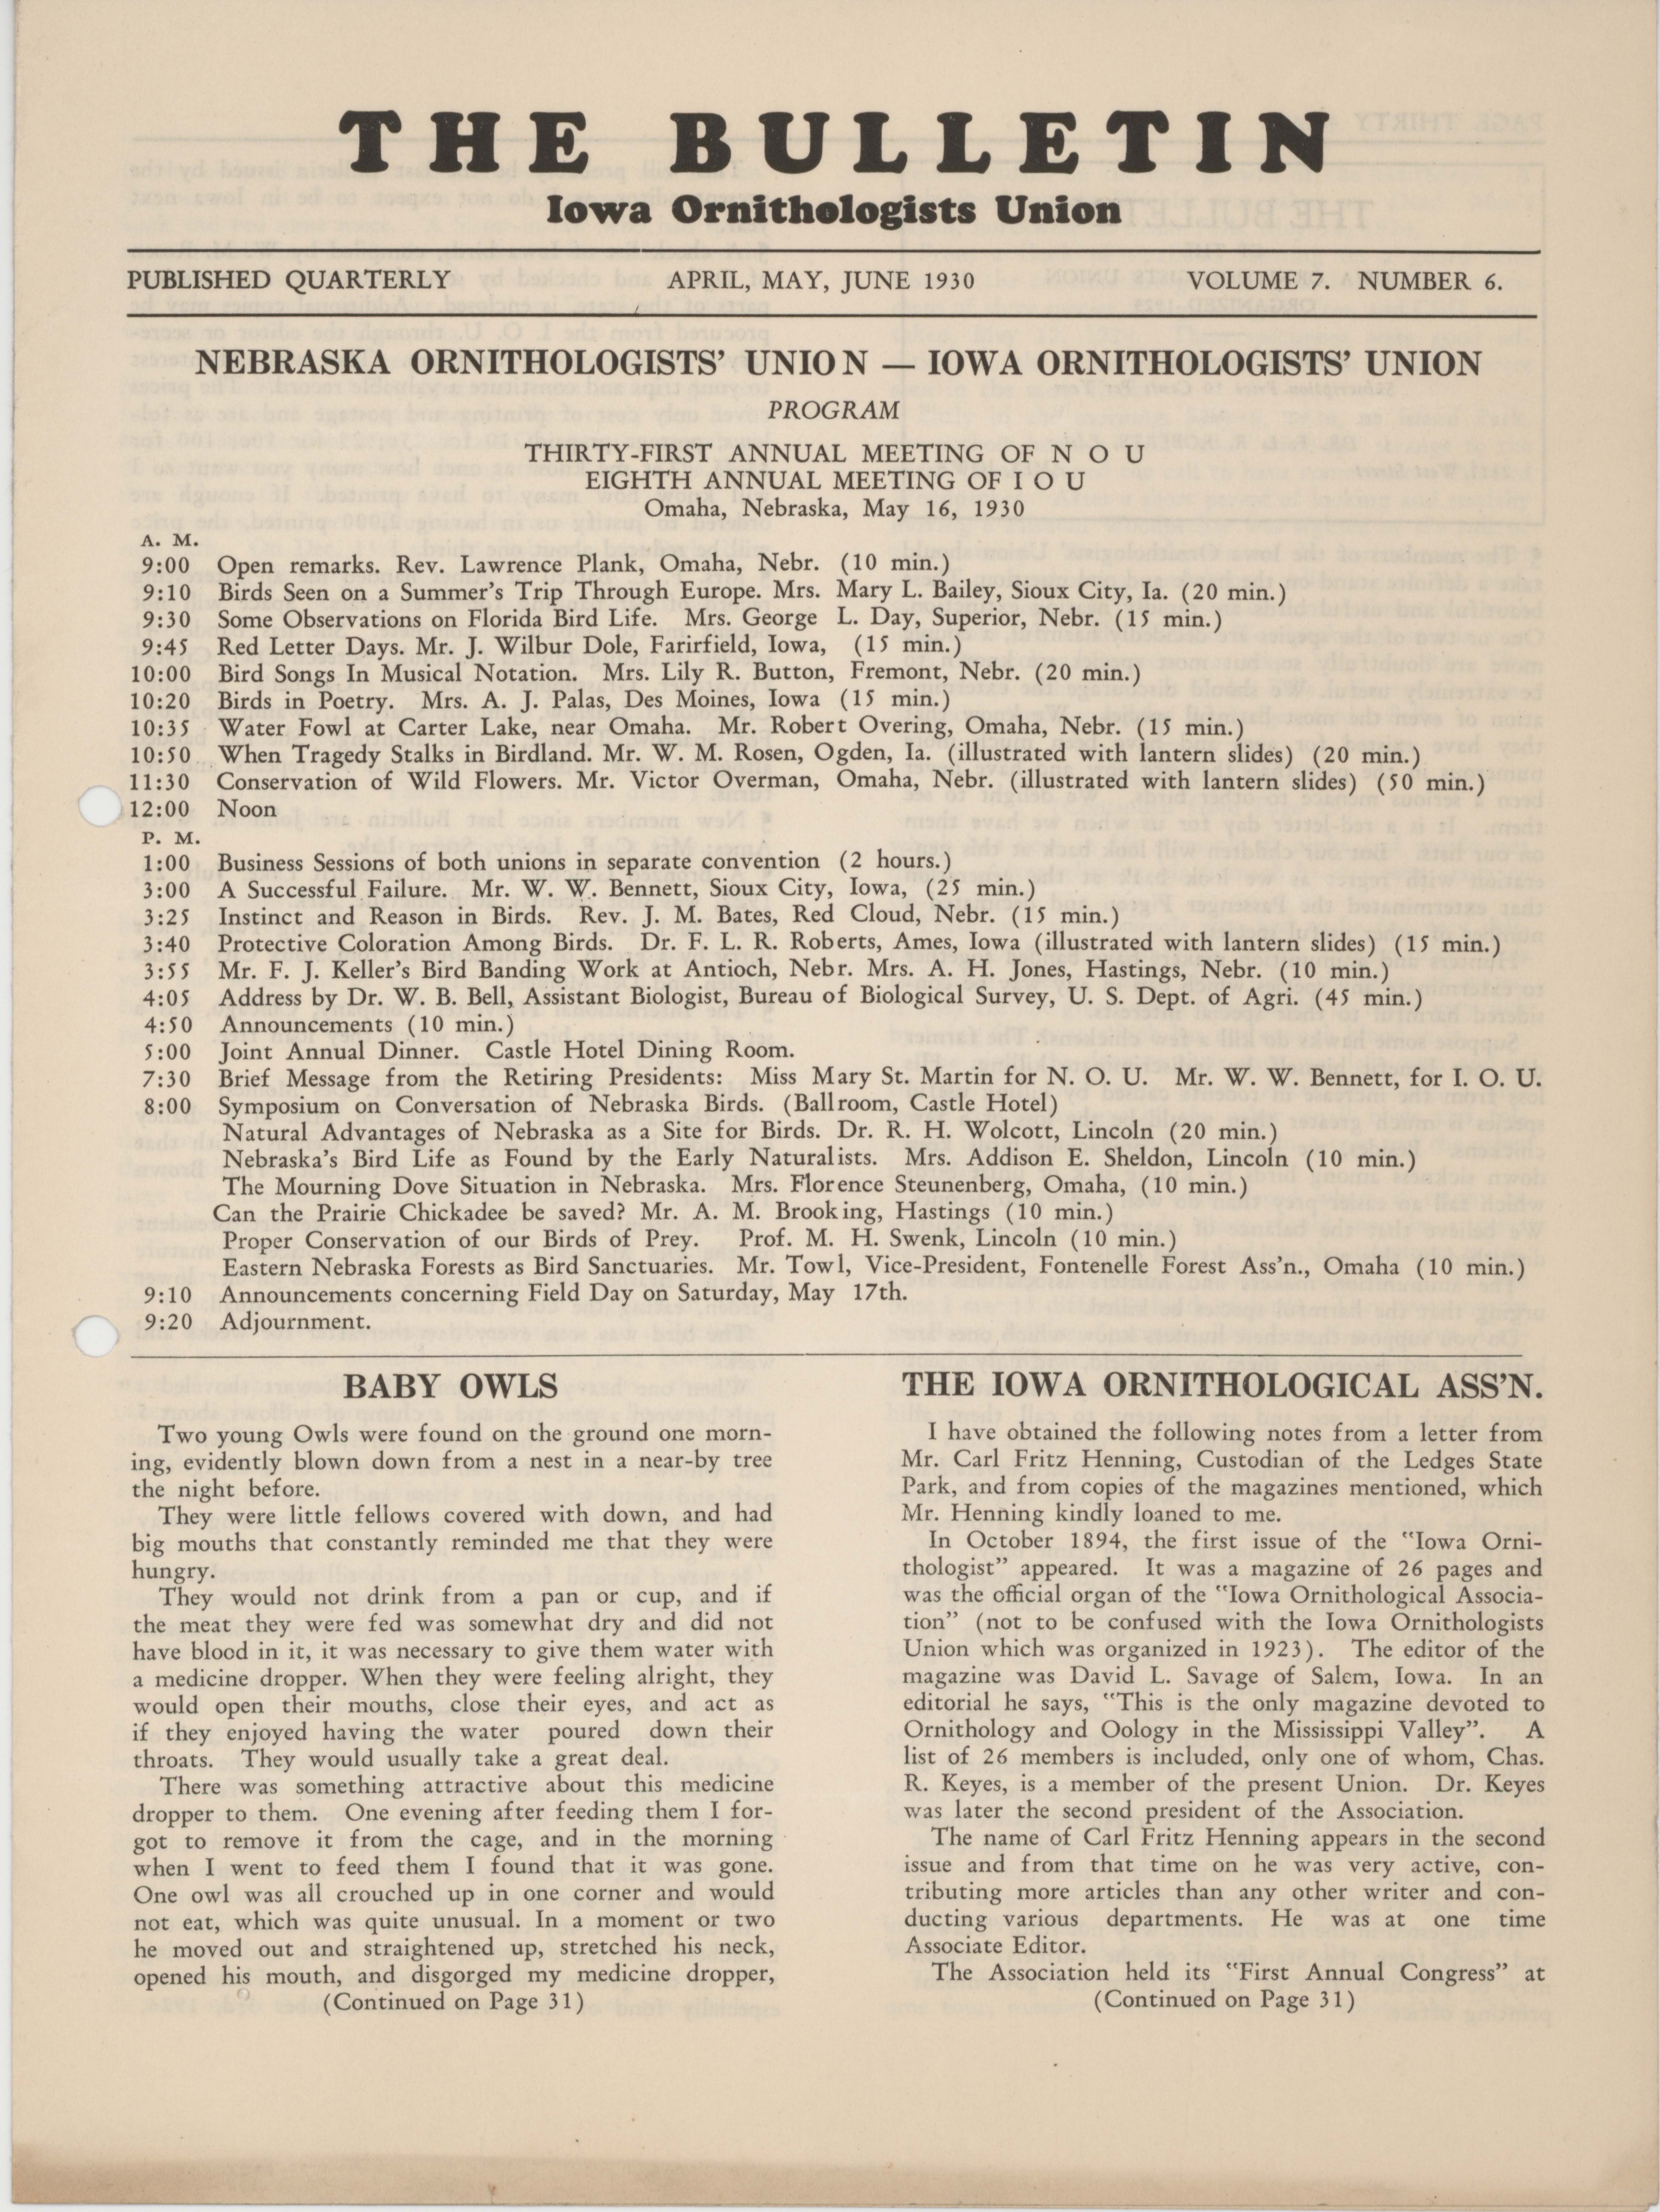 Bulletin (Iowa Ornithologists Union), Volume 7, Number 6, April/June 1930